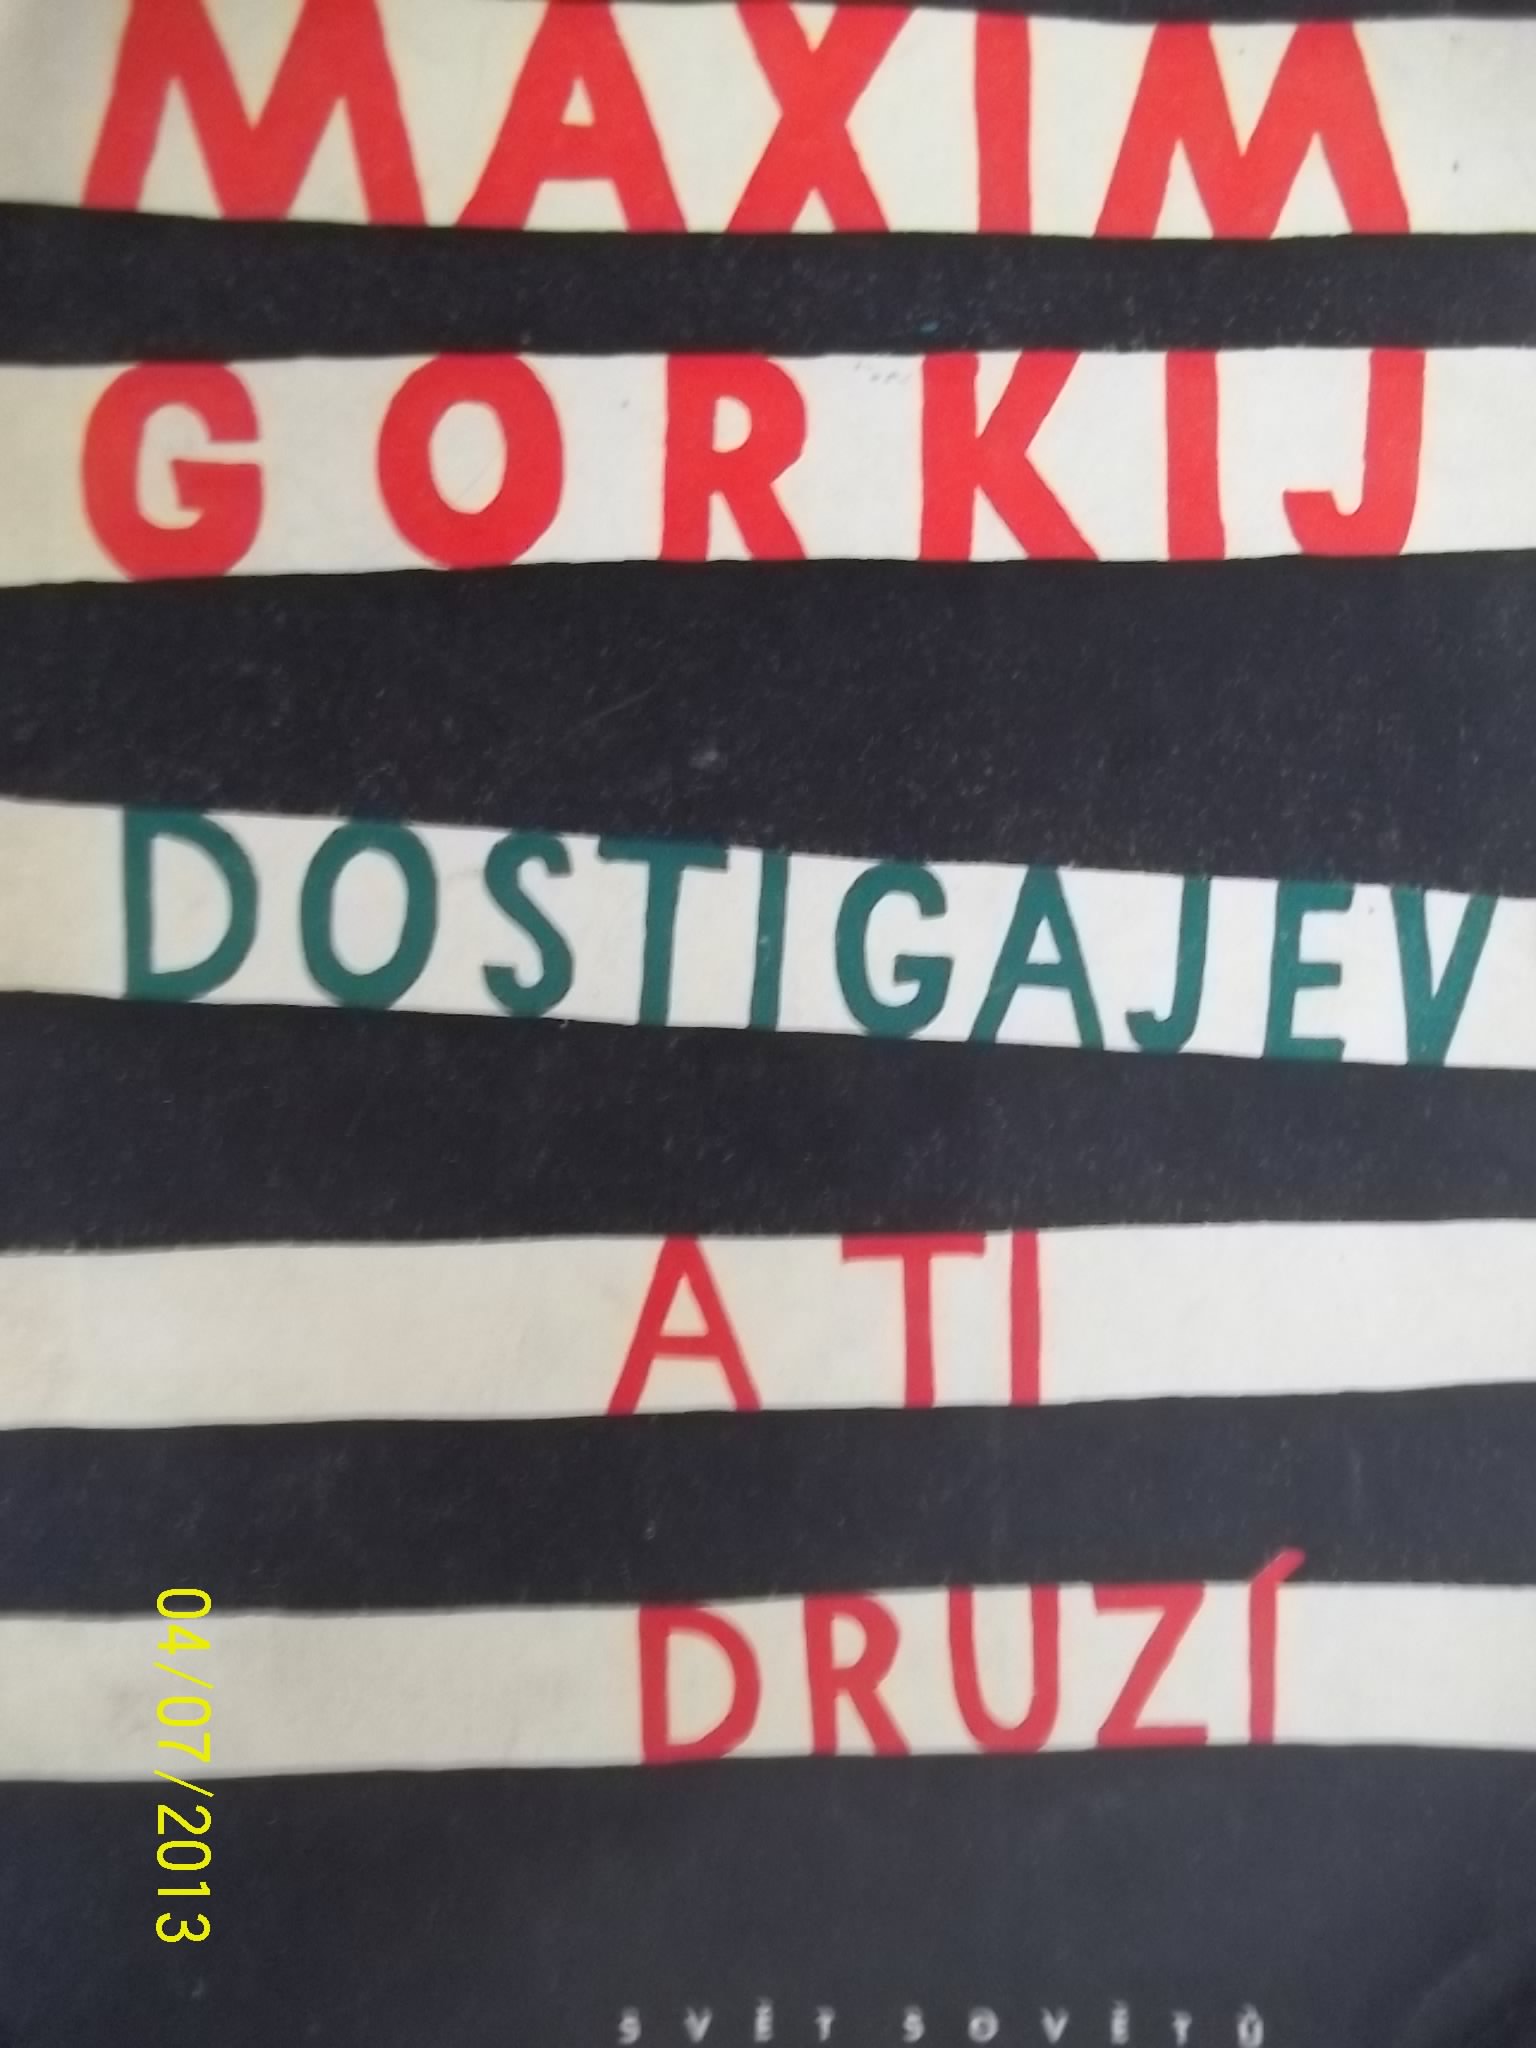 zobrazit detail knihy Gorkij: Dostigajev a ti druz bro.